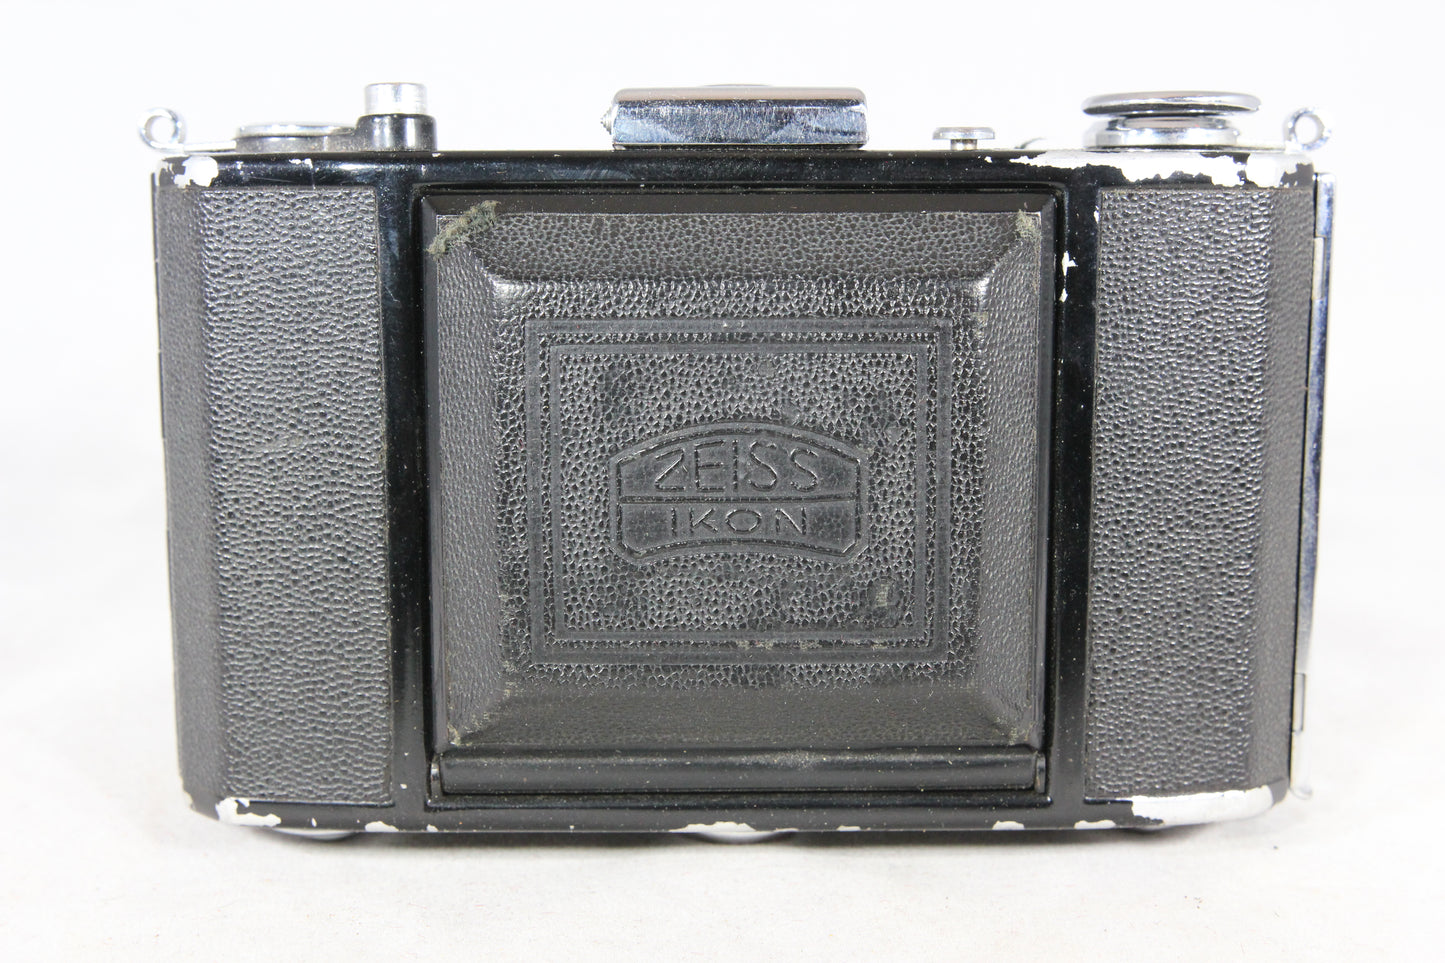 Zeiss Ikon Nettar 516/16 Camera with Novar-Anastigmat 7.5cm Lens, Made in Germany